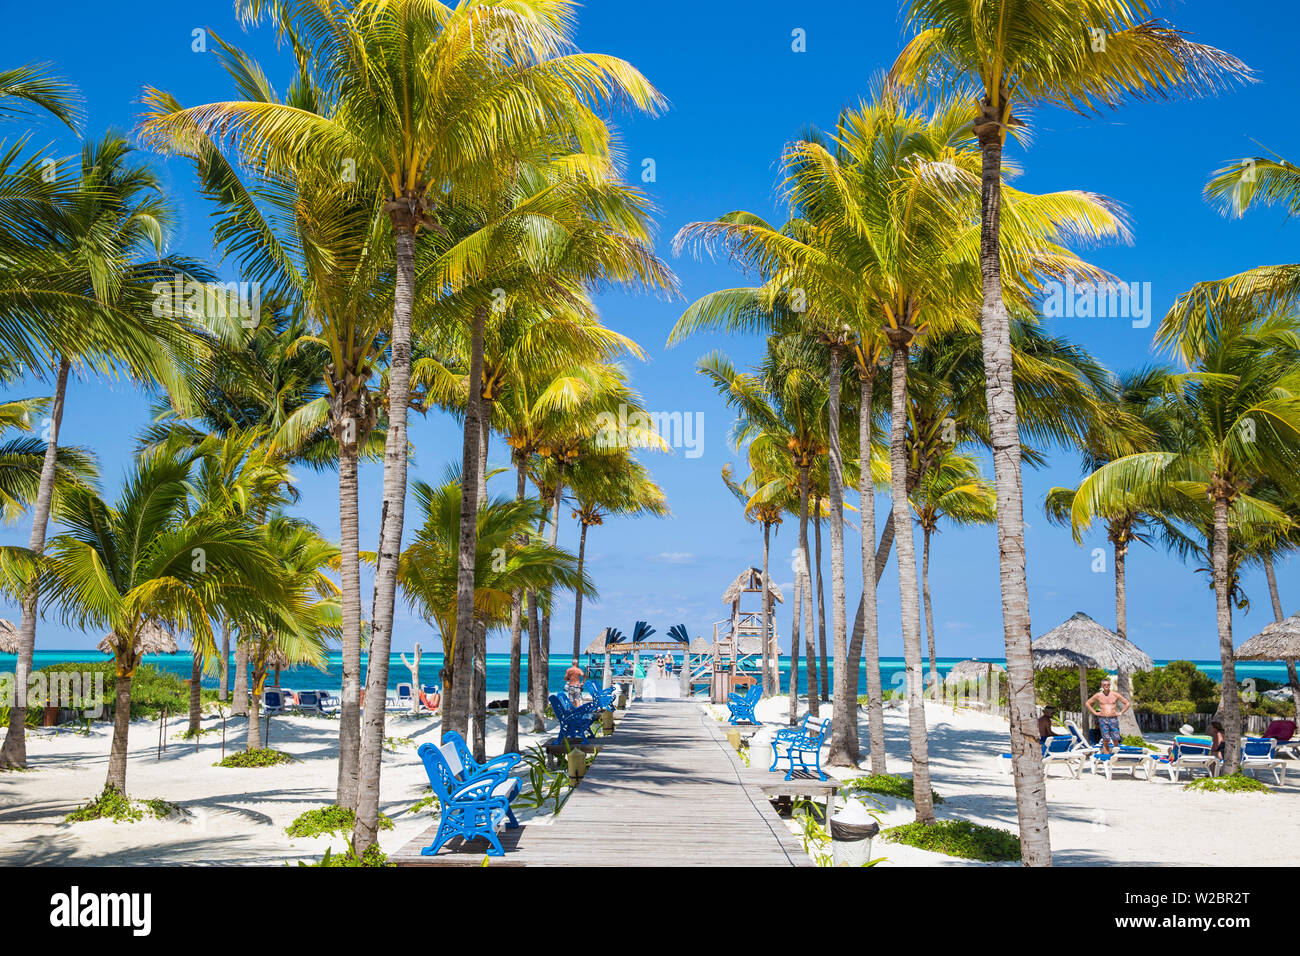 Cuba, Jardines del Rey, Cayo Guillermo, Playa El Paso, Melia Hotel, Palm lined wooden walkway leading to beach and pier Stock Photo